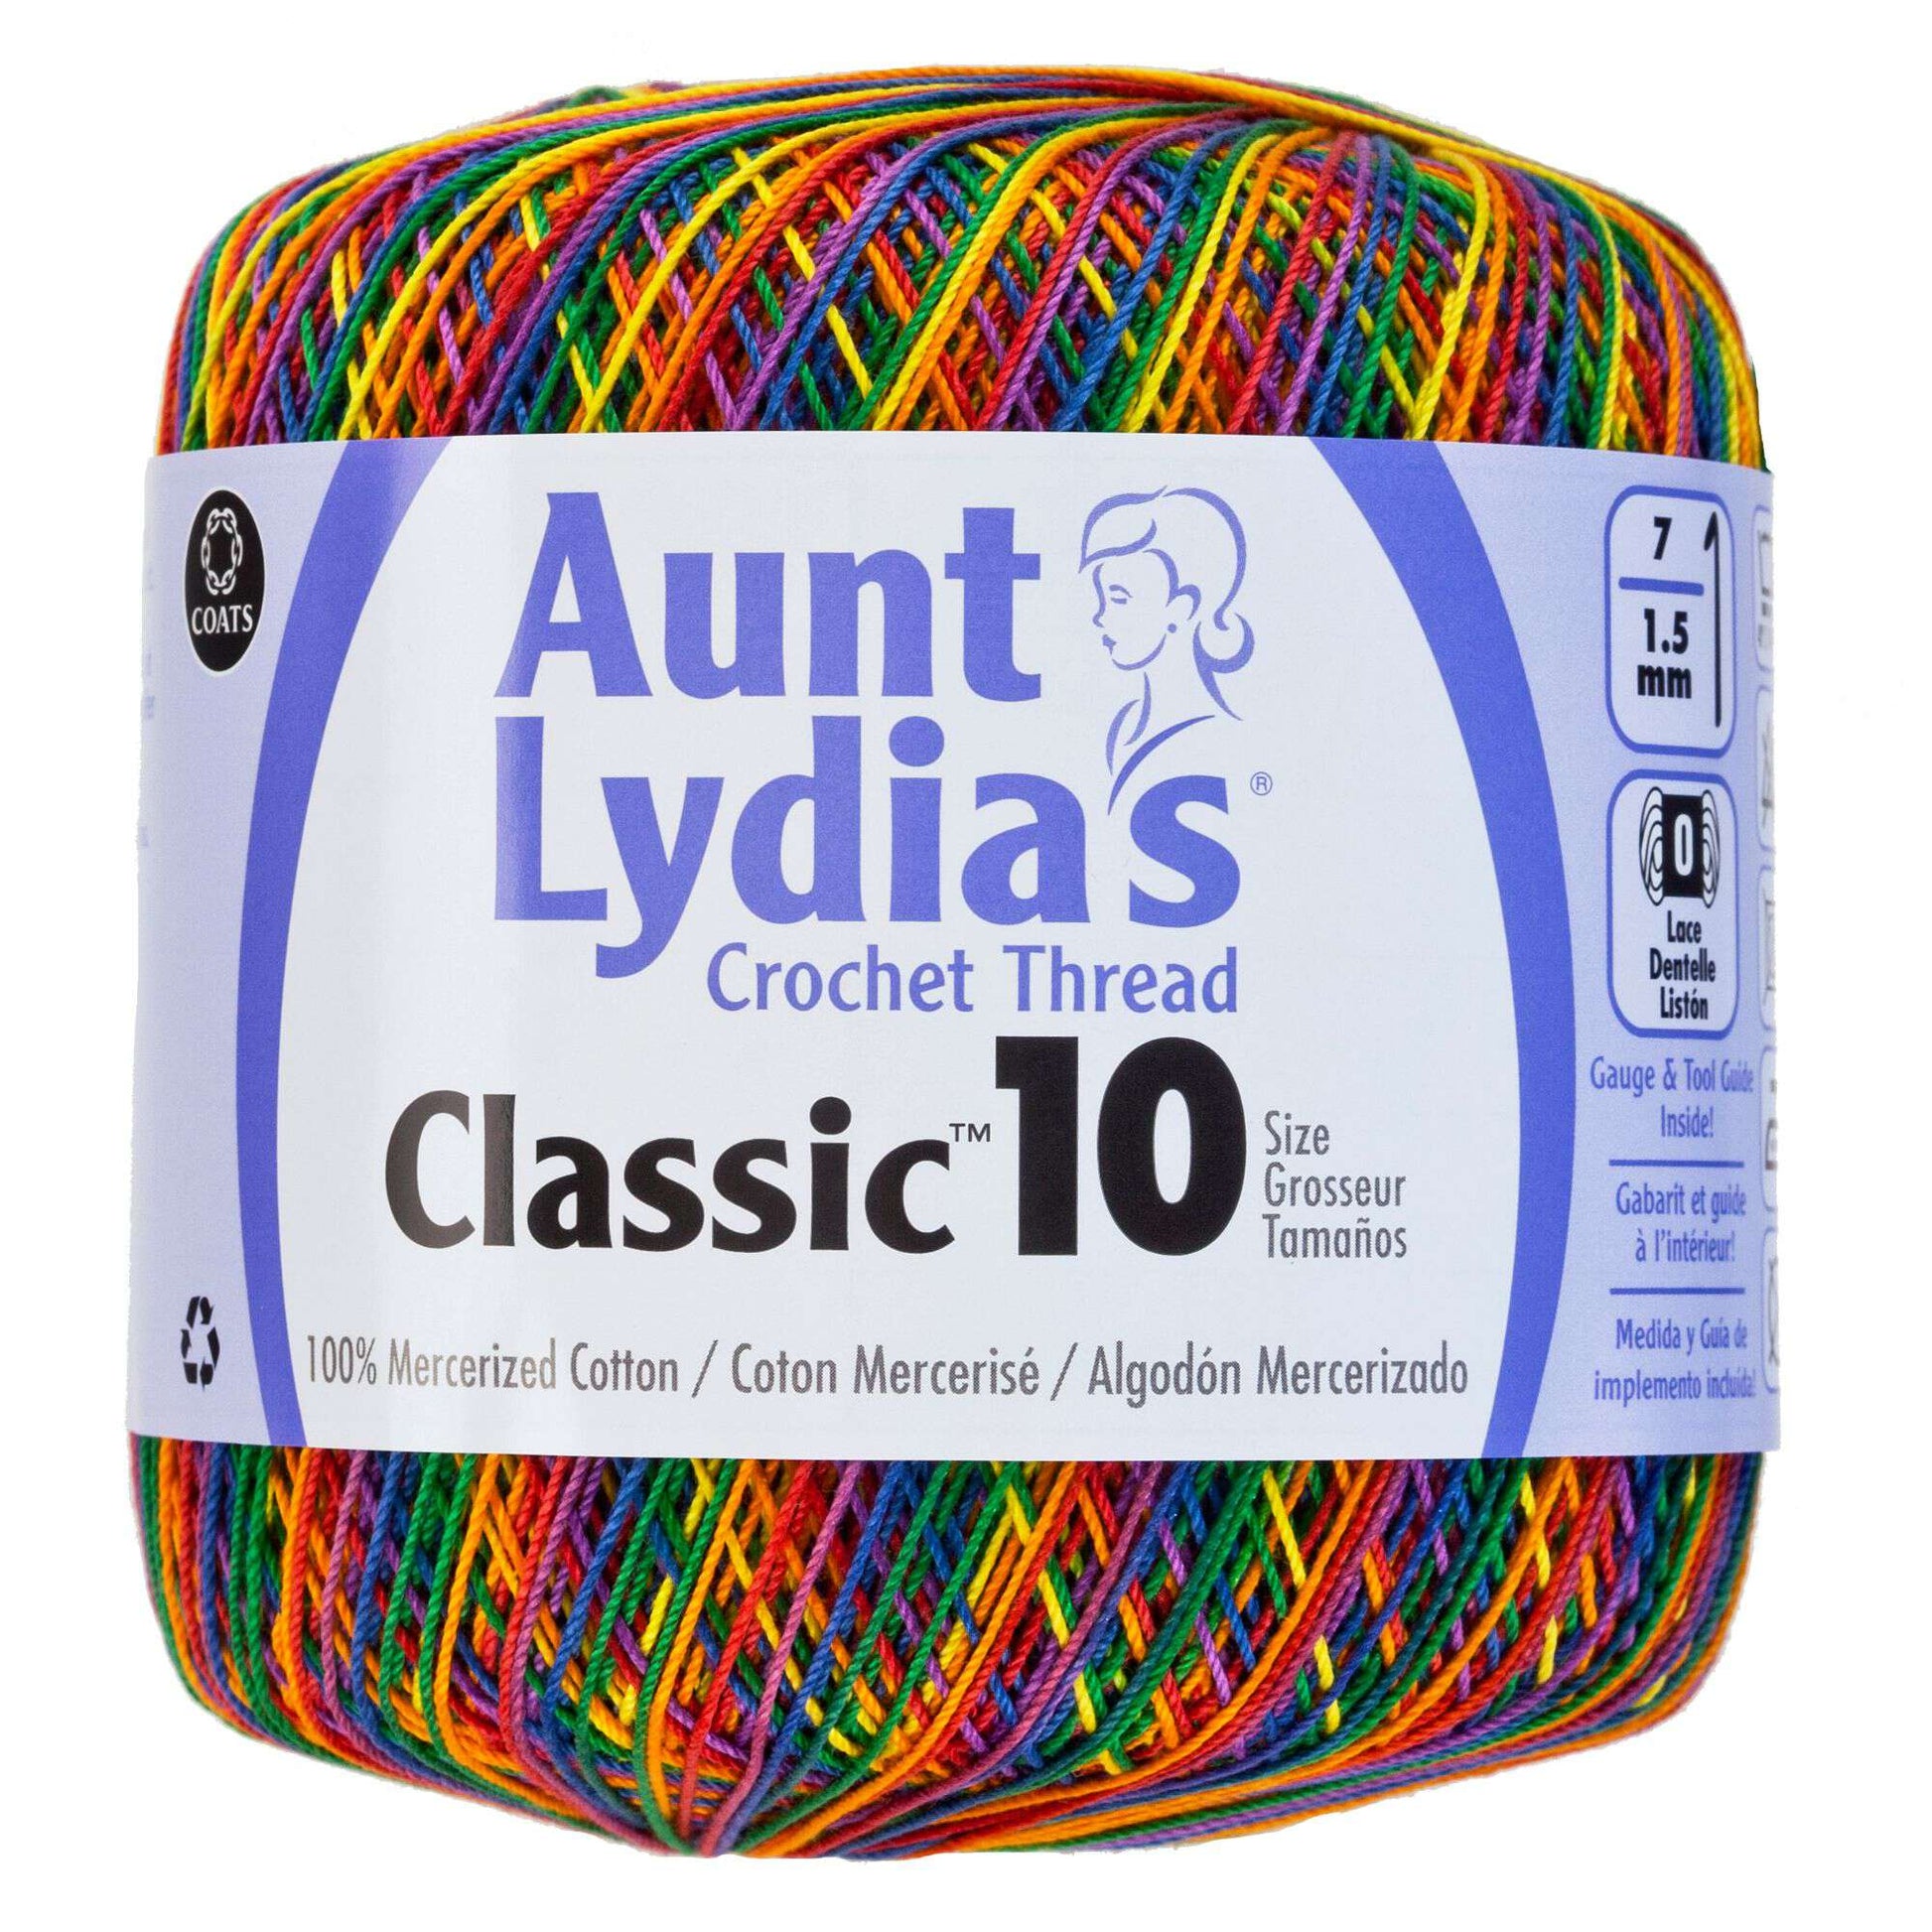 Aunt Lydia's Classic Crochet Thread Size 10 - Clearance shades Mexicana